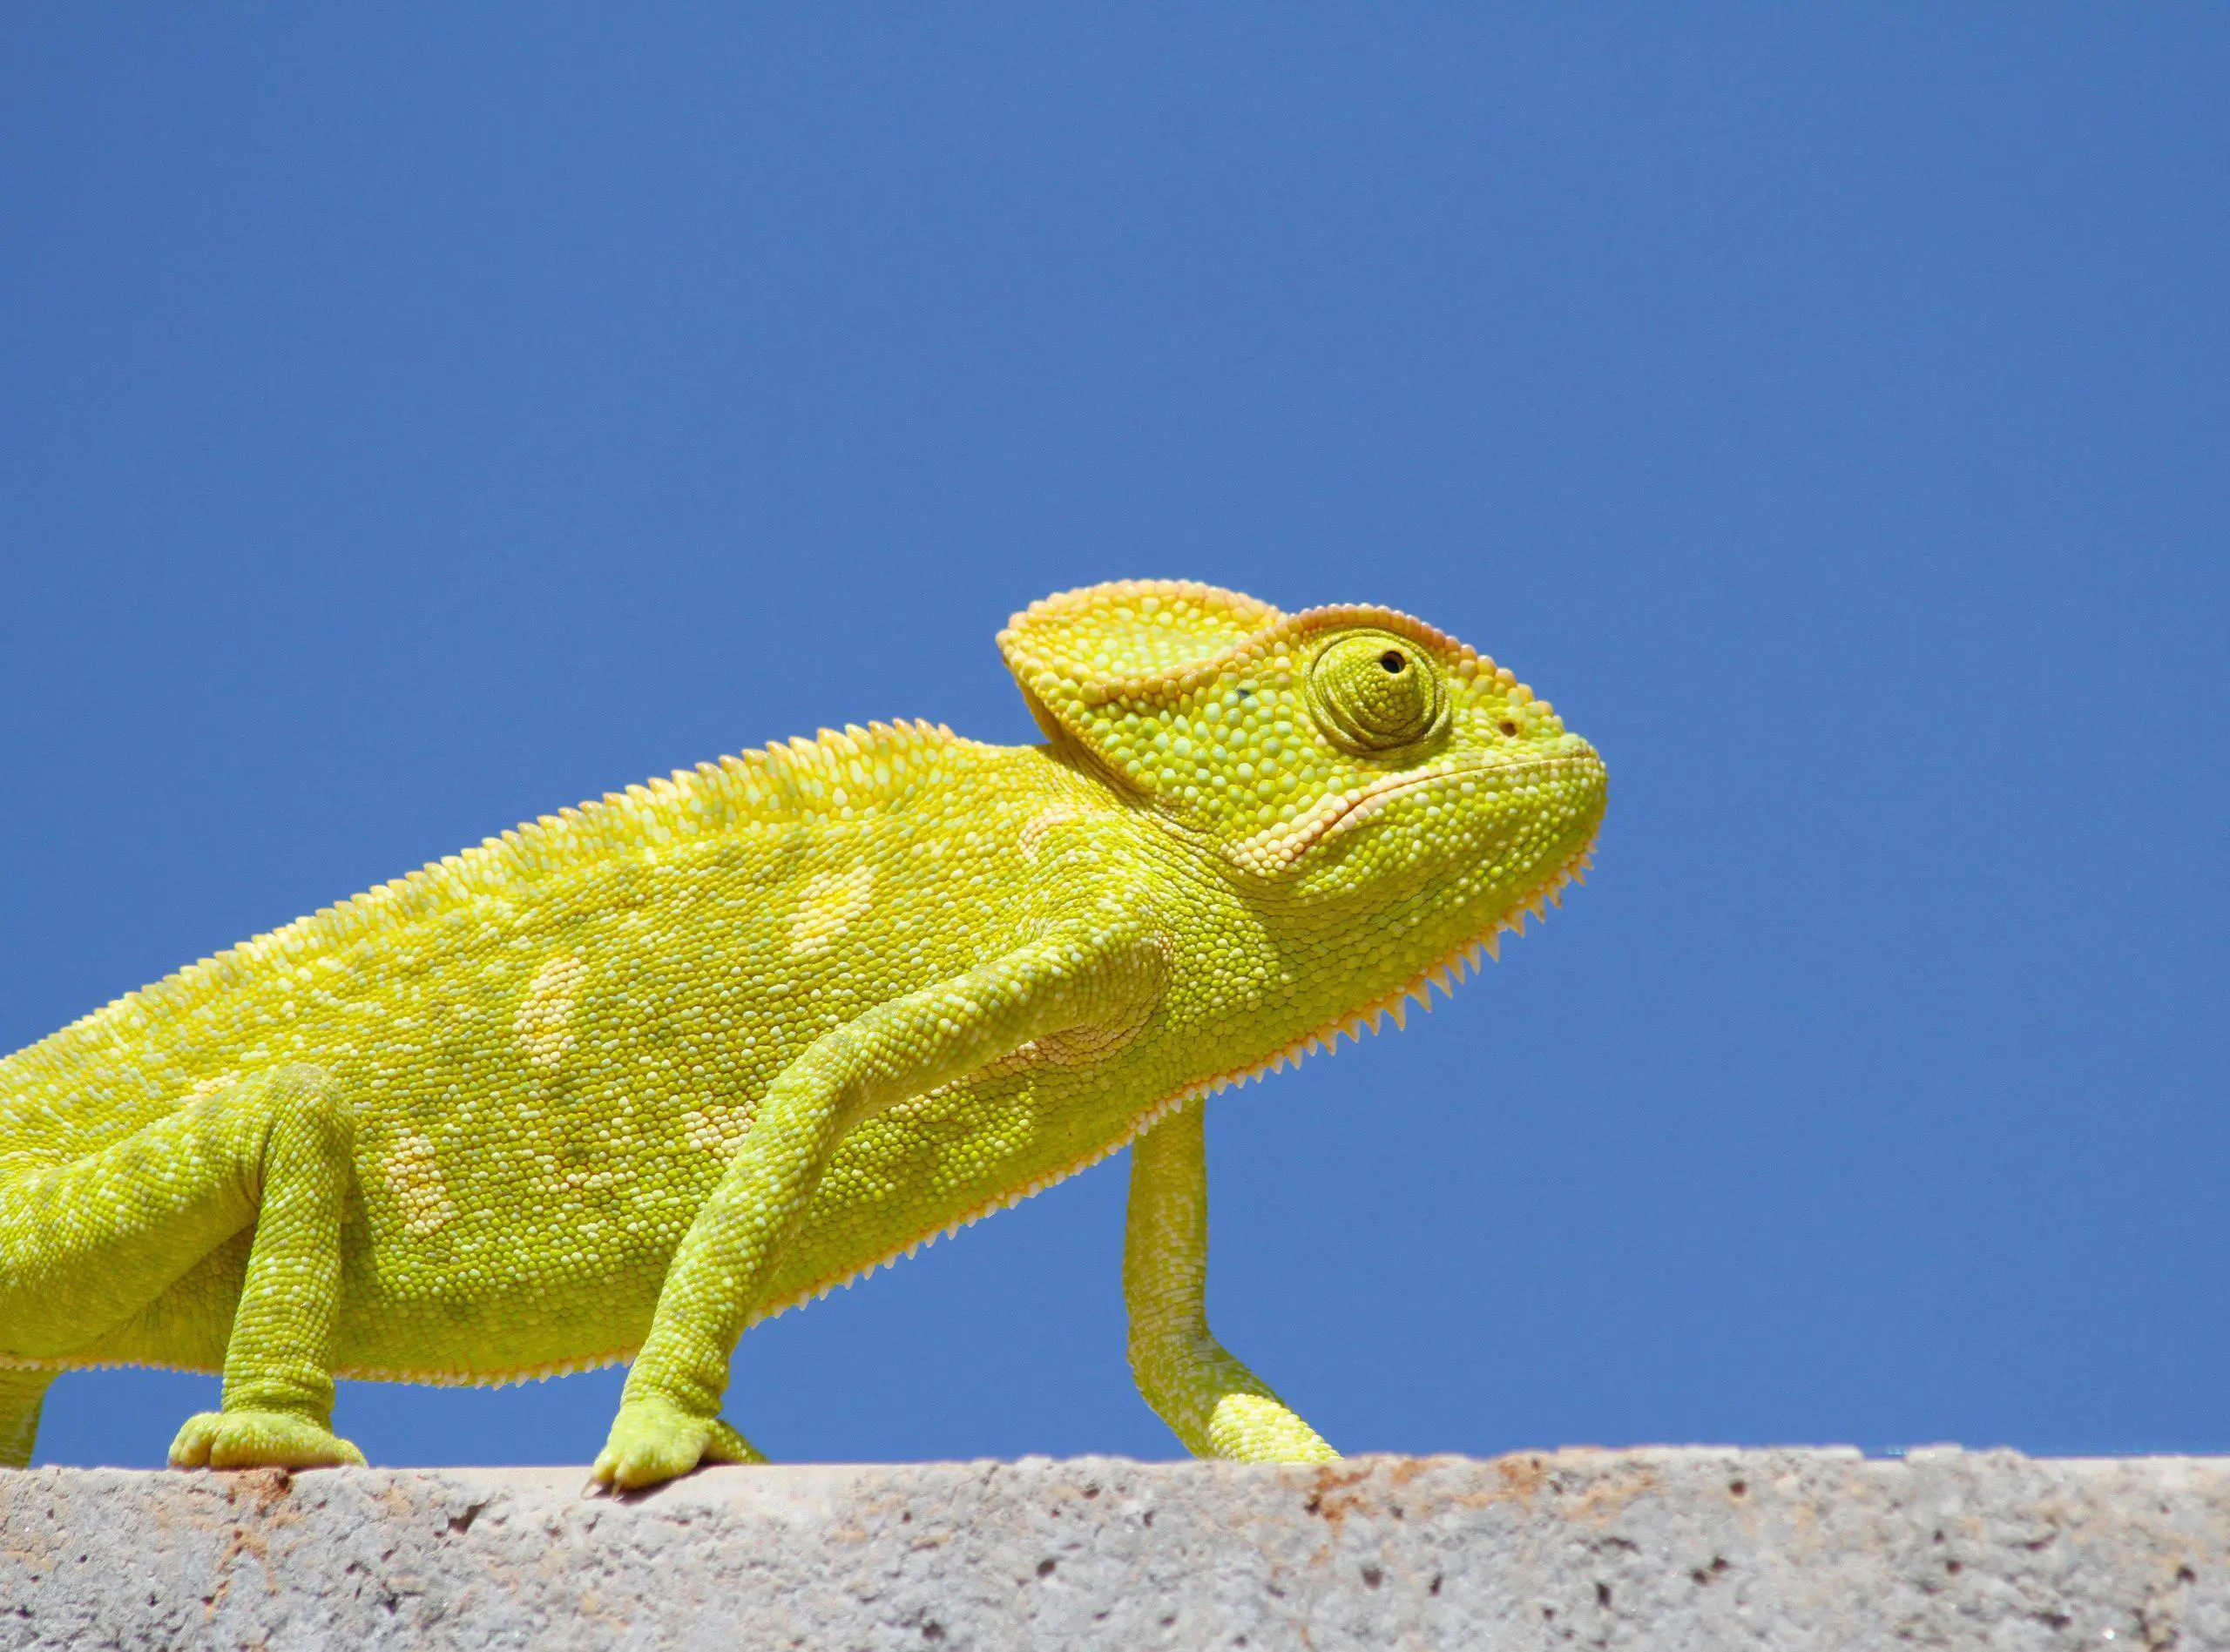 Colourful chameleon sitting on a branch - Cool Inc Saudi Arabia